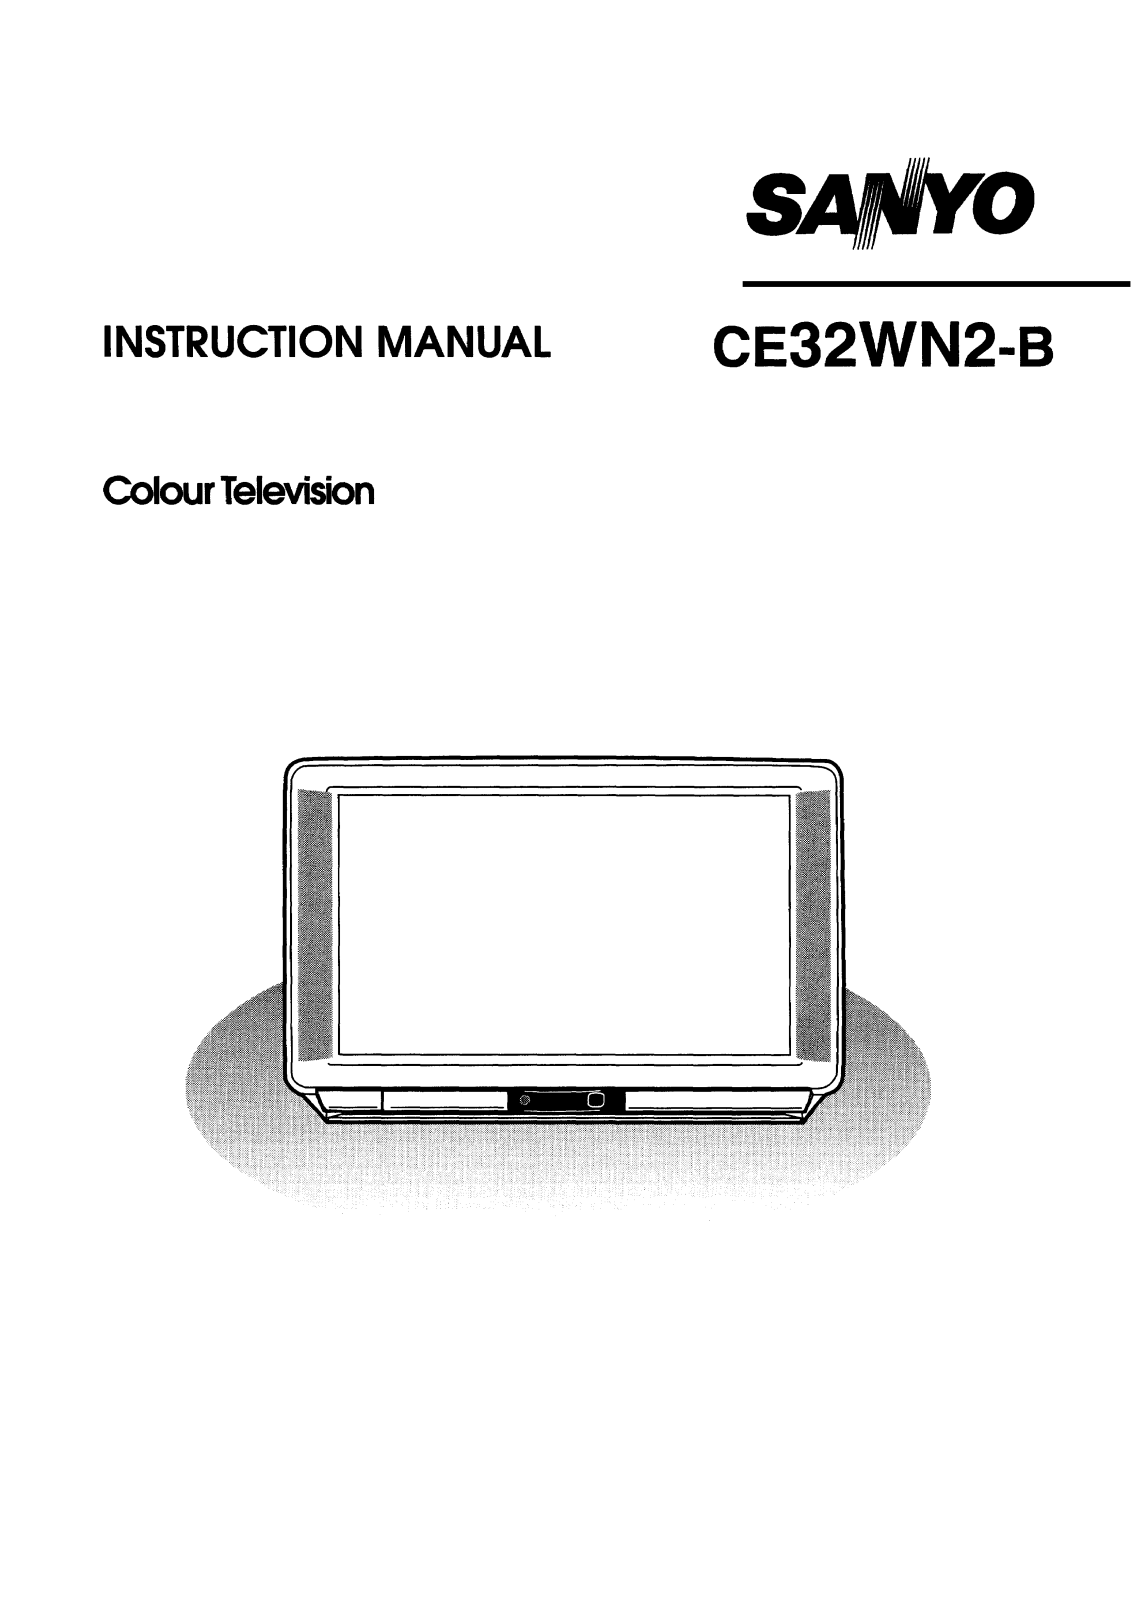 Sanyo CE32WN2-B Instruction Manual